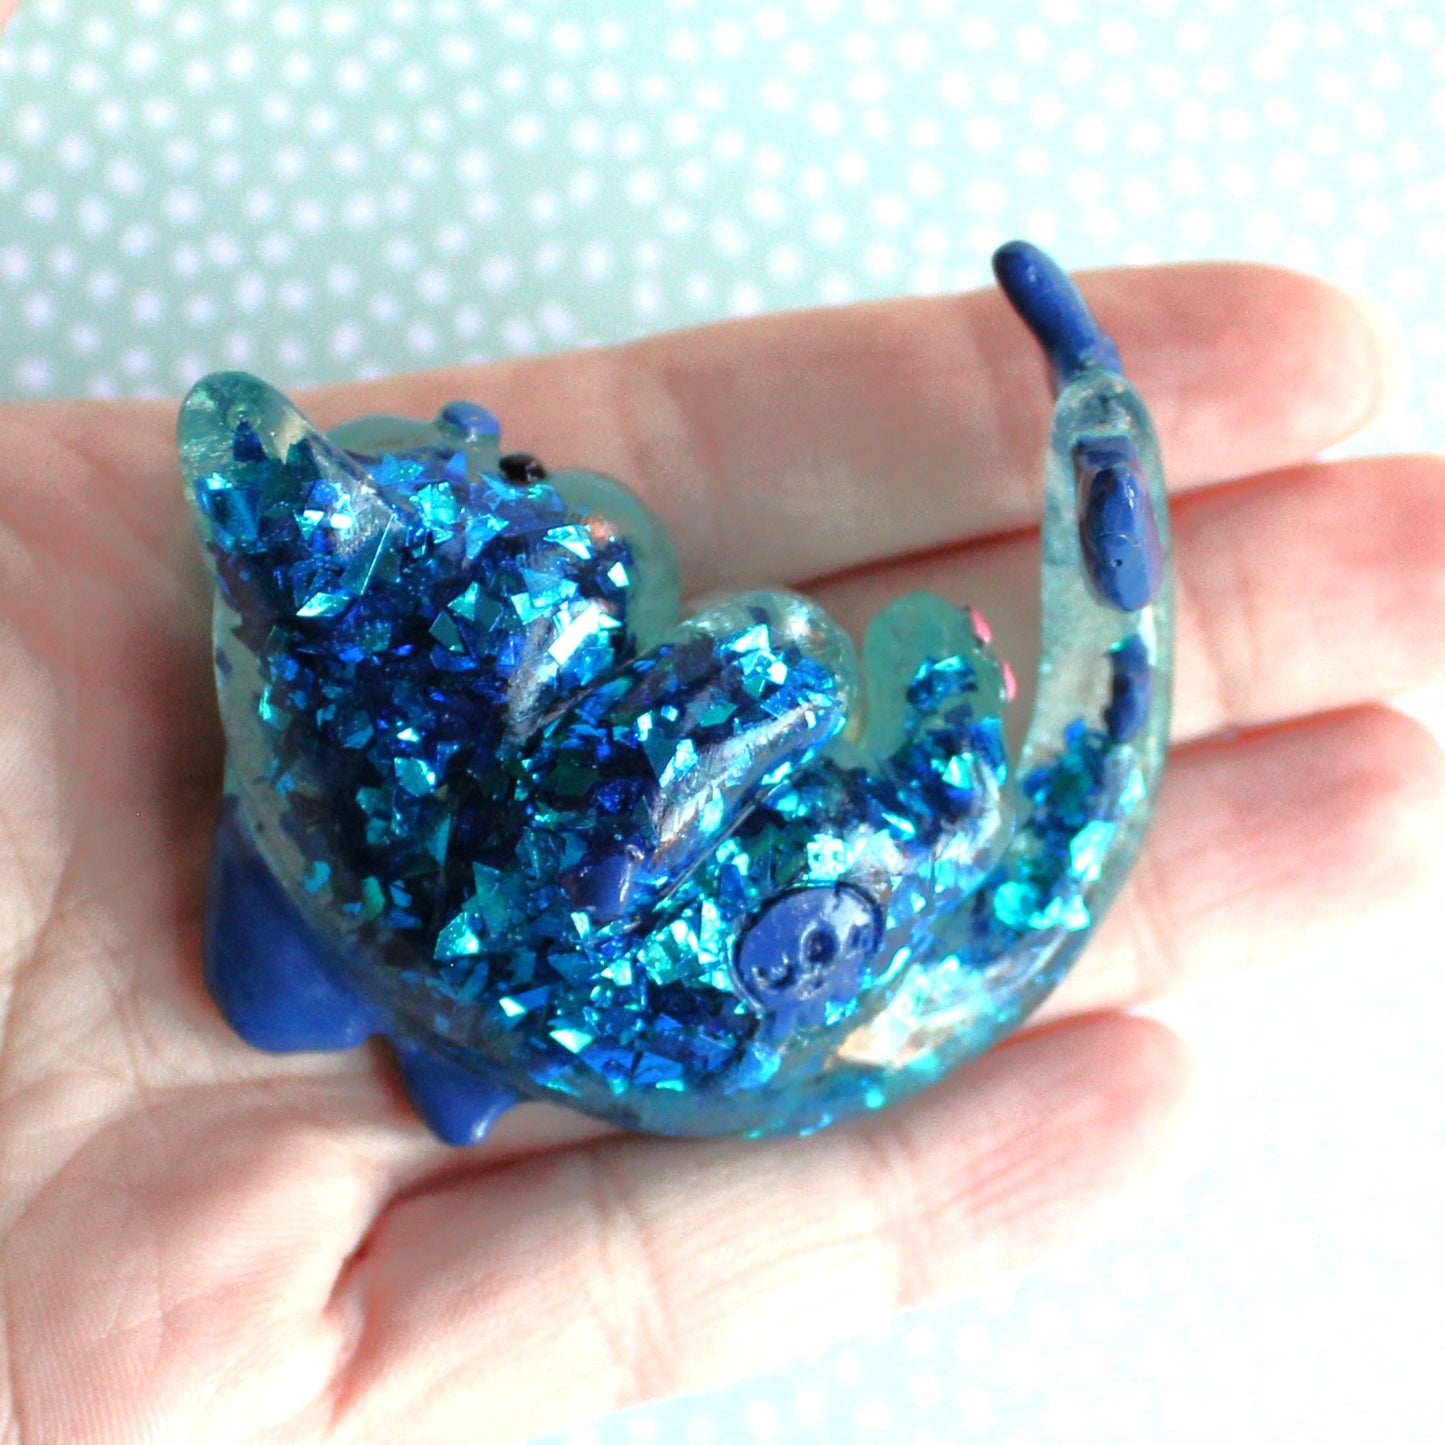 Blue Glitter Shards Cat Shark Figure. Handmade Resin Art Toy Mini Fig. Desk Decoration Collectable. Chibi